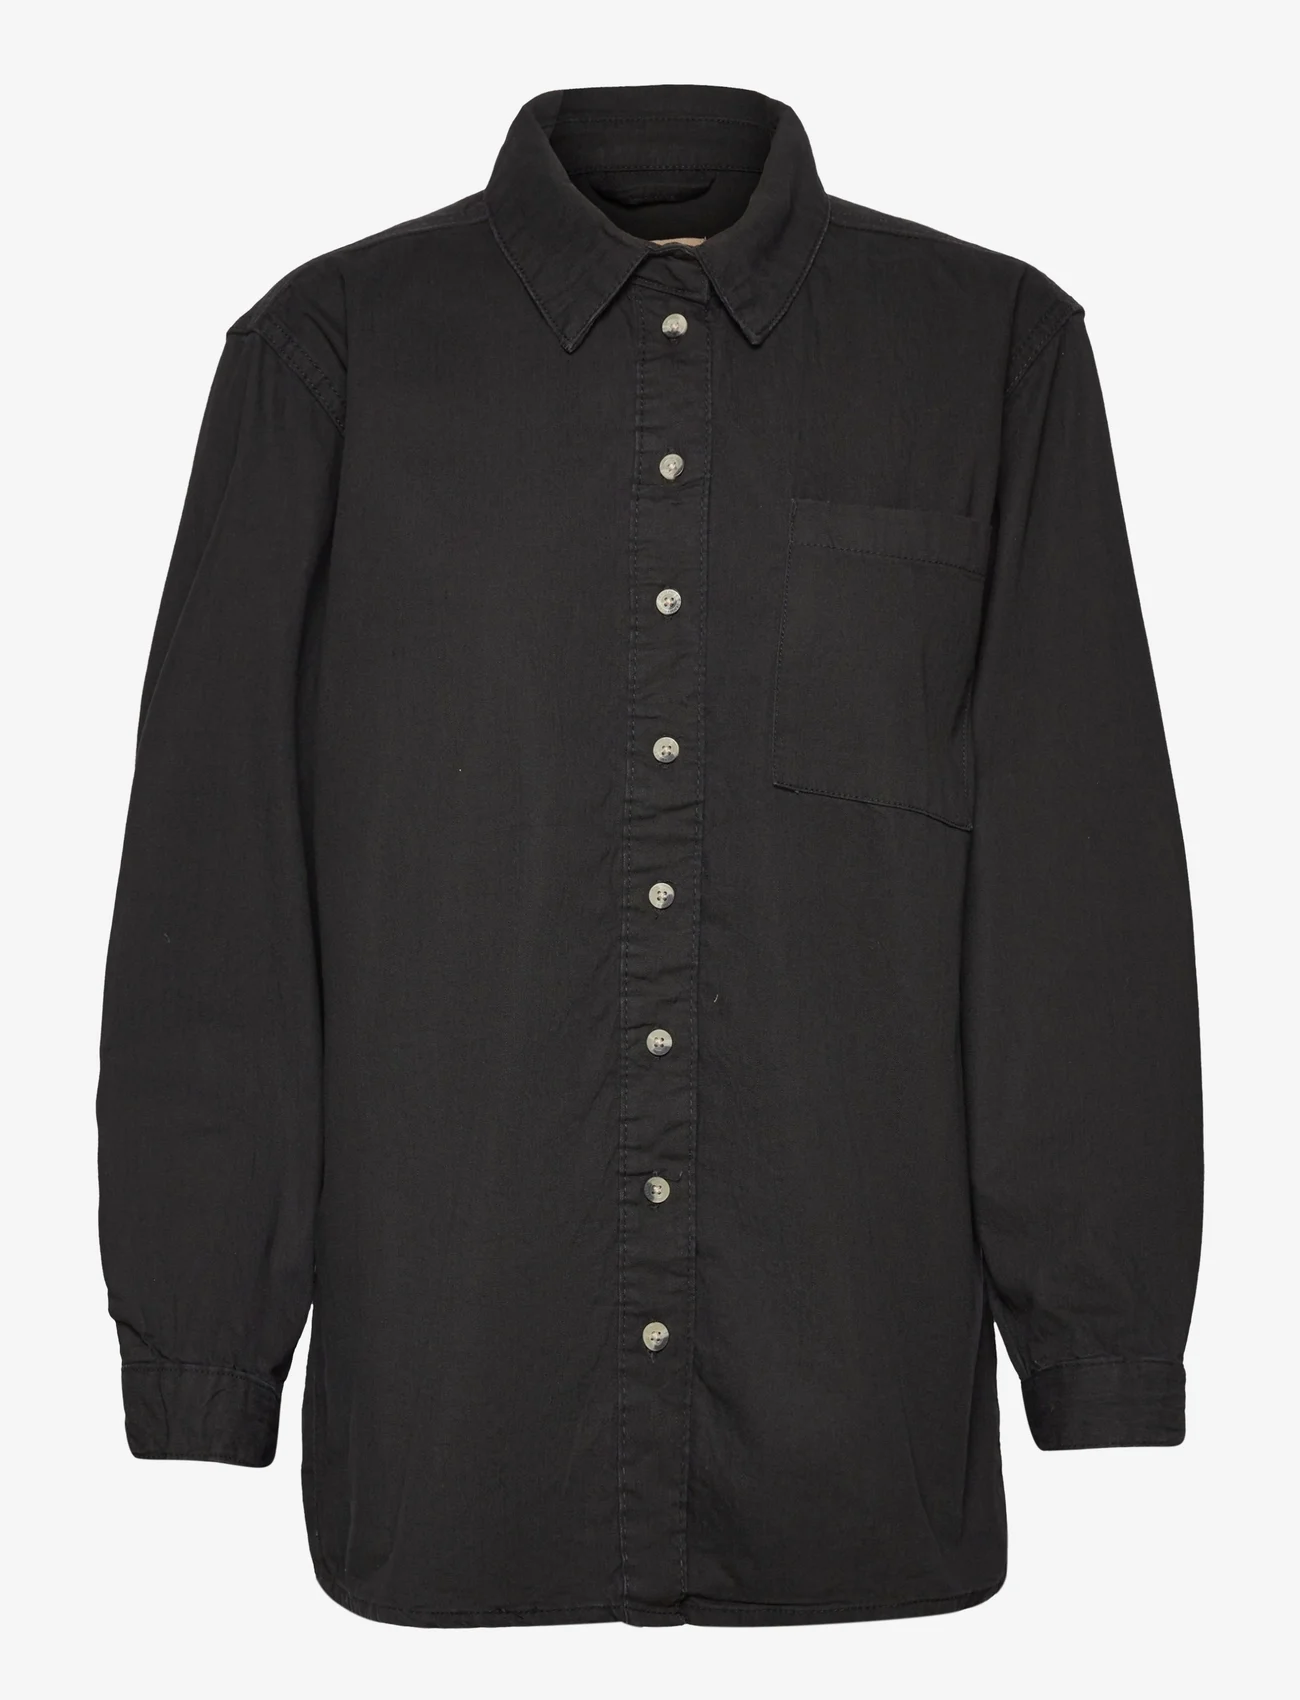 Denim project - DPWCLARA SHIRT - denim shirts - 001 black - 0